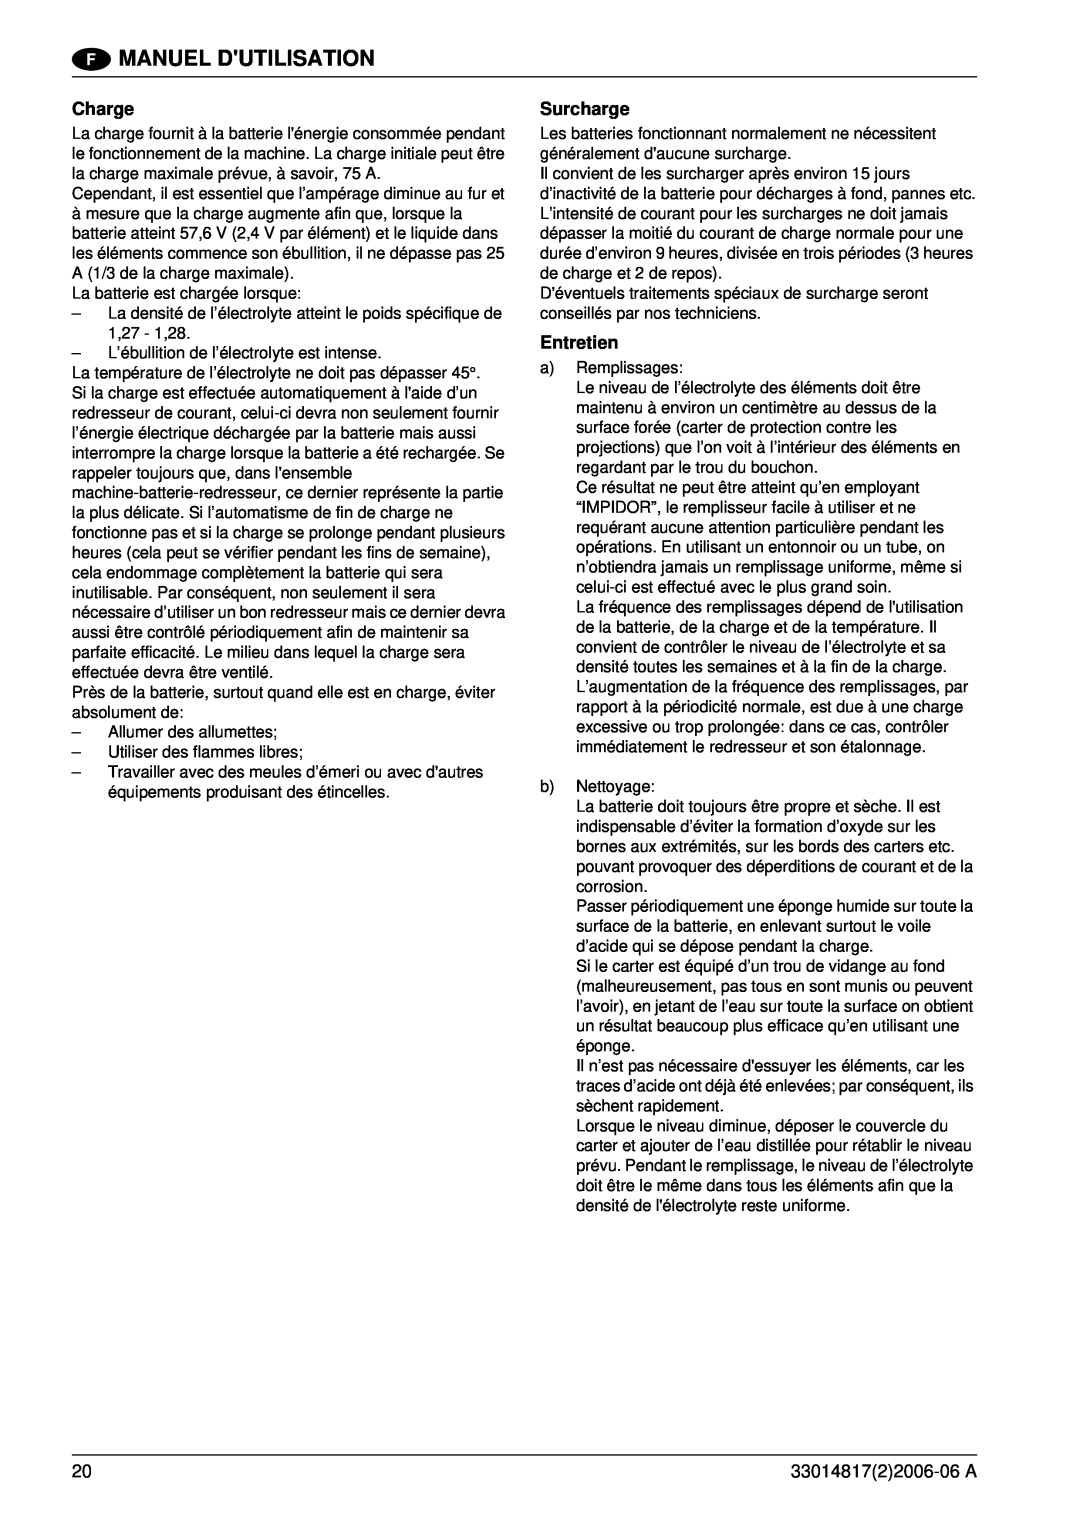 Nilfisk-ALTO SR1800C B-D manuel dutilisation Charge, Surcharge, Entretien, Manuel Dutilisation, 3301481722006-06A 